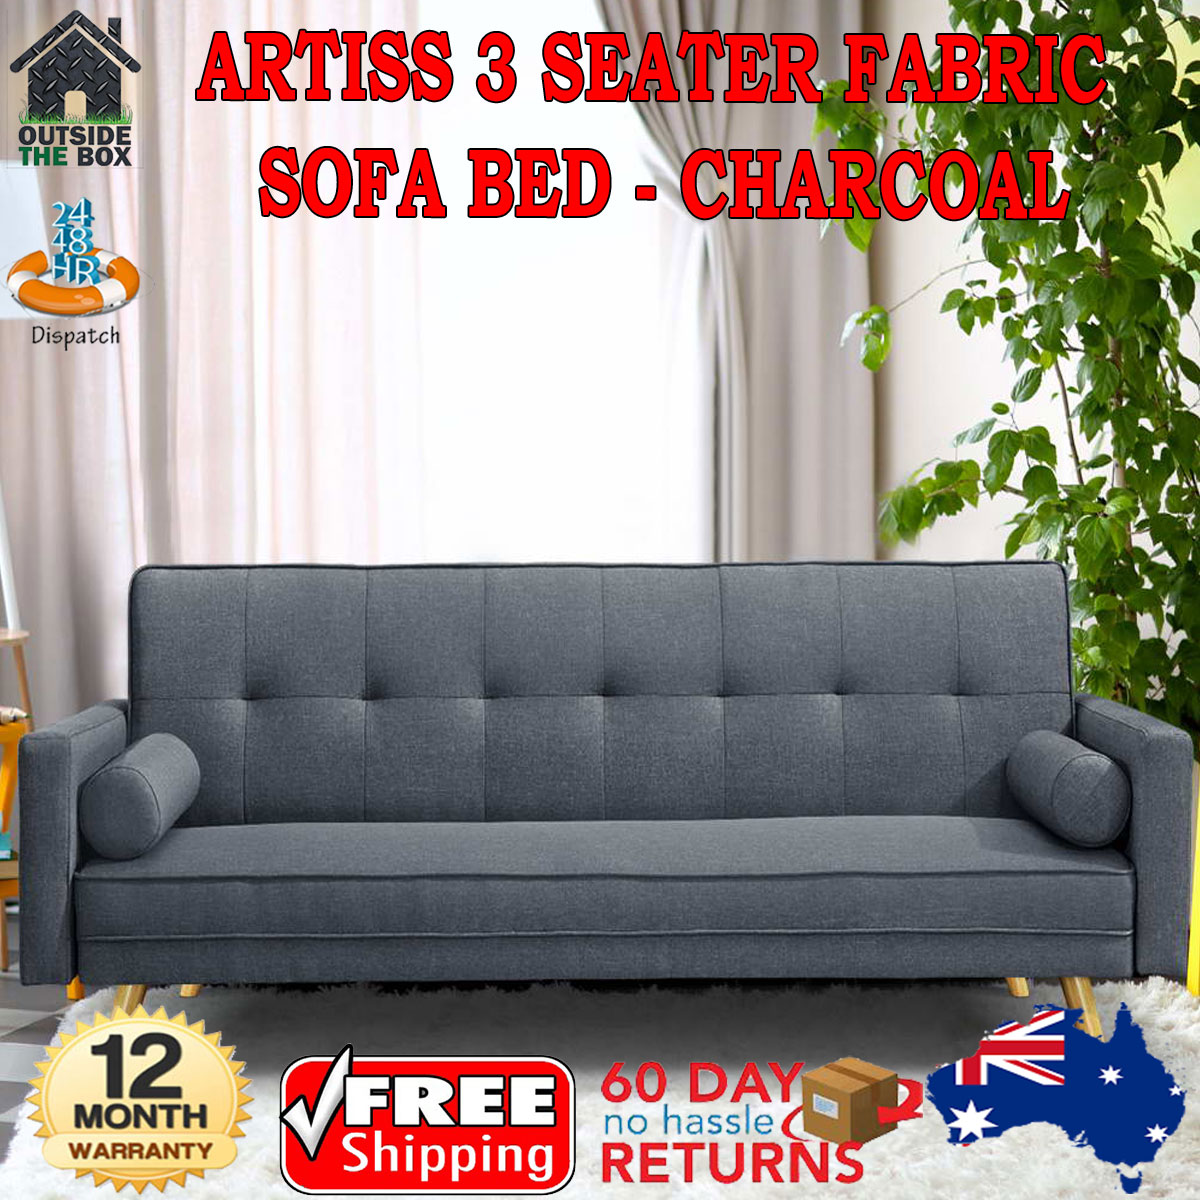 Artiss 3 Seater Fabric Sofa Bed Sleek Contemporary Design Wood